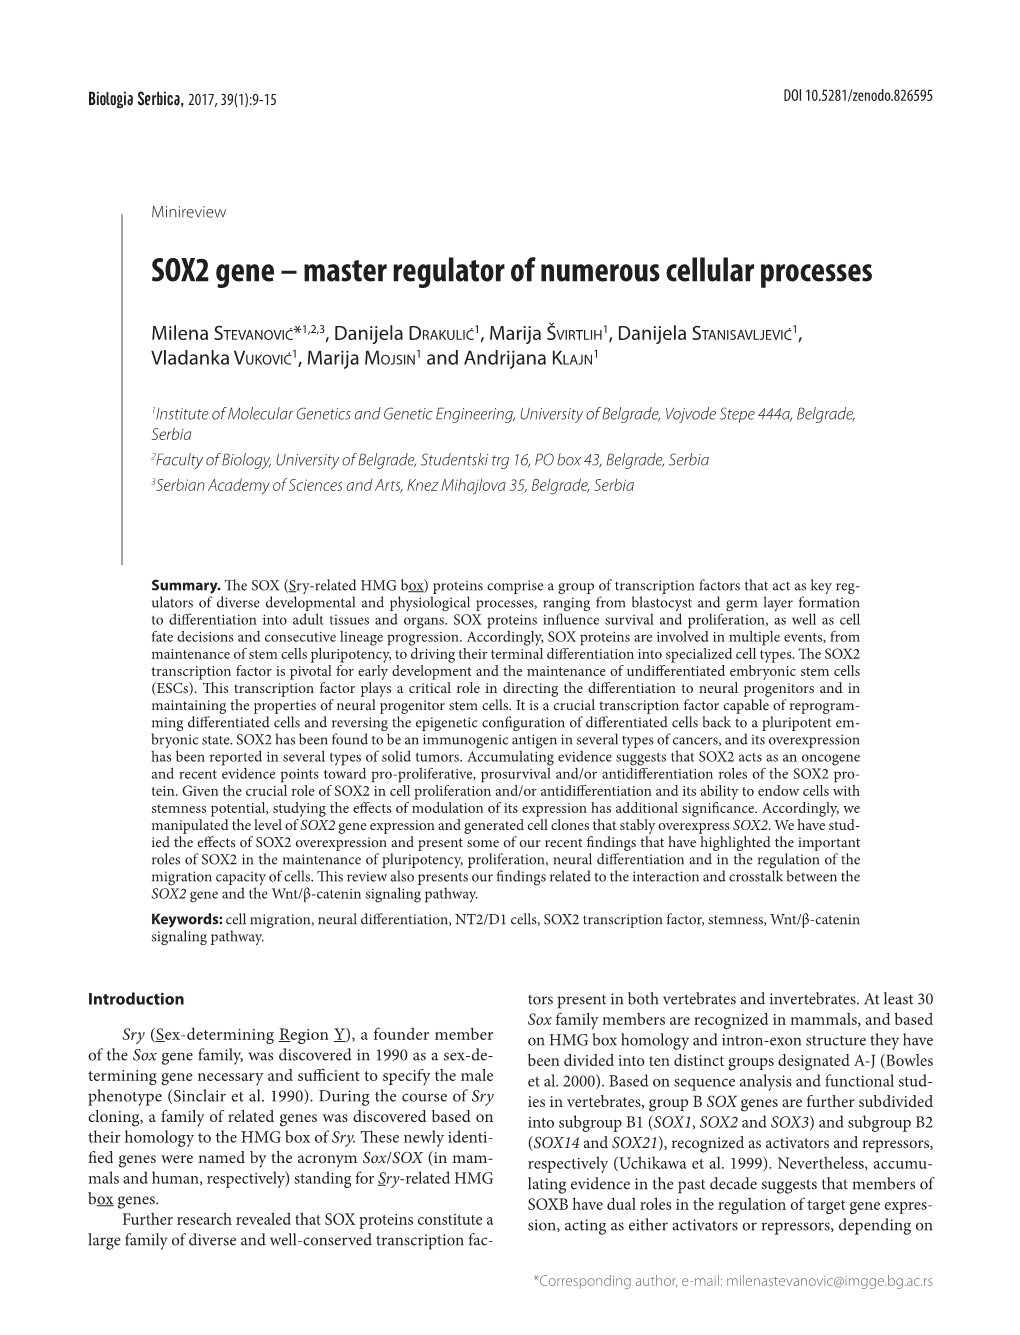 SOX2 Gene – Master Regulator of Numerous Cellular Processes